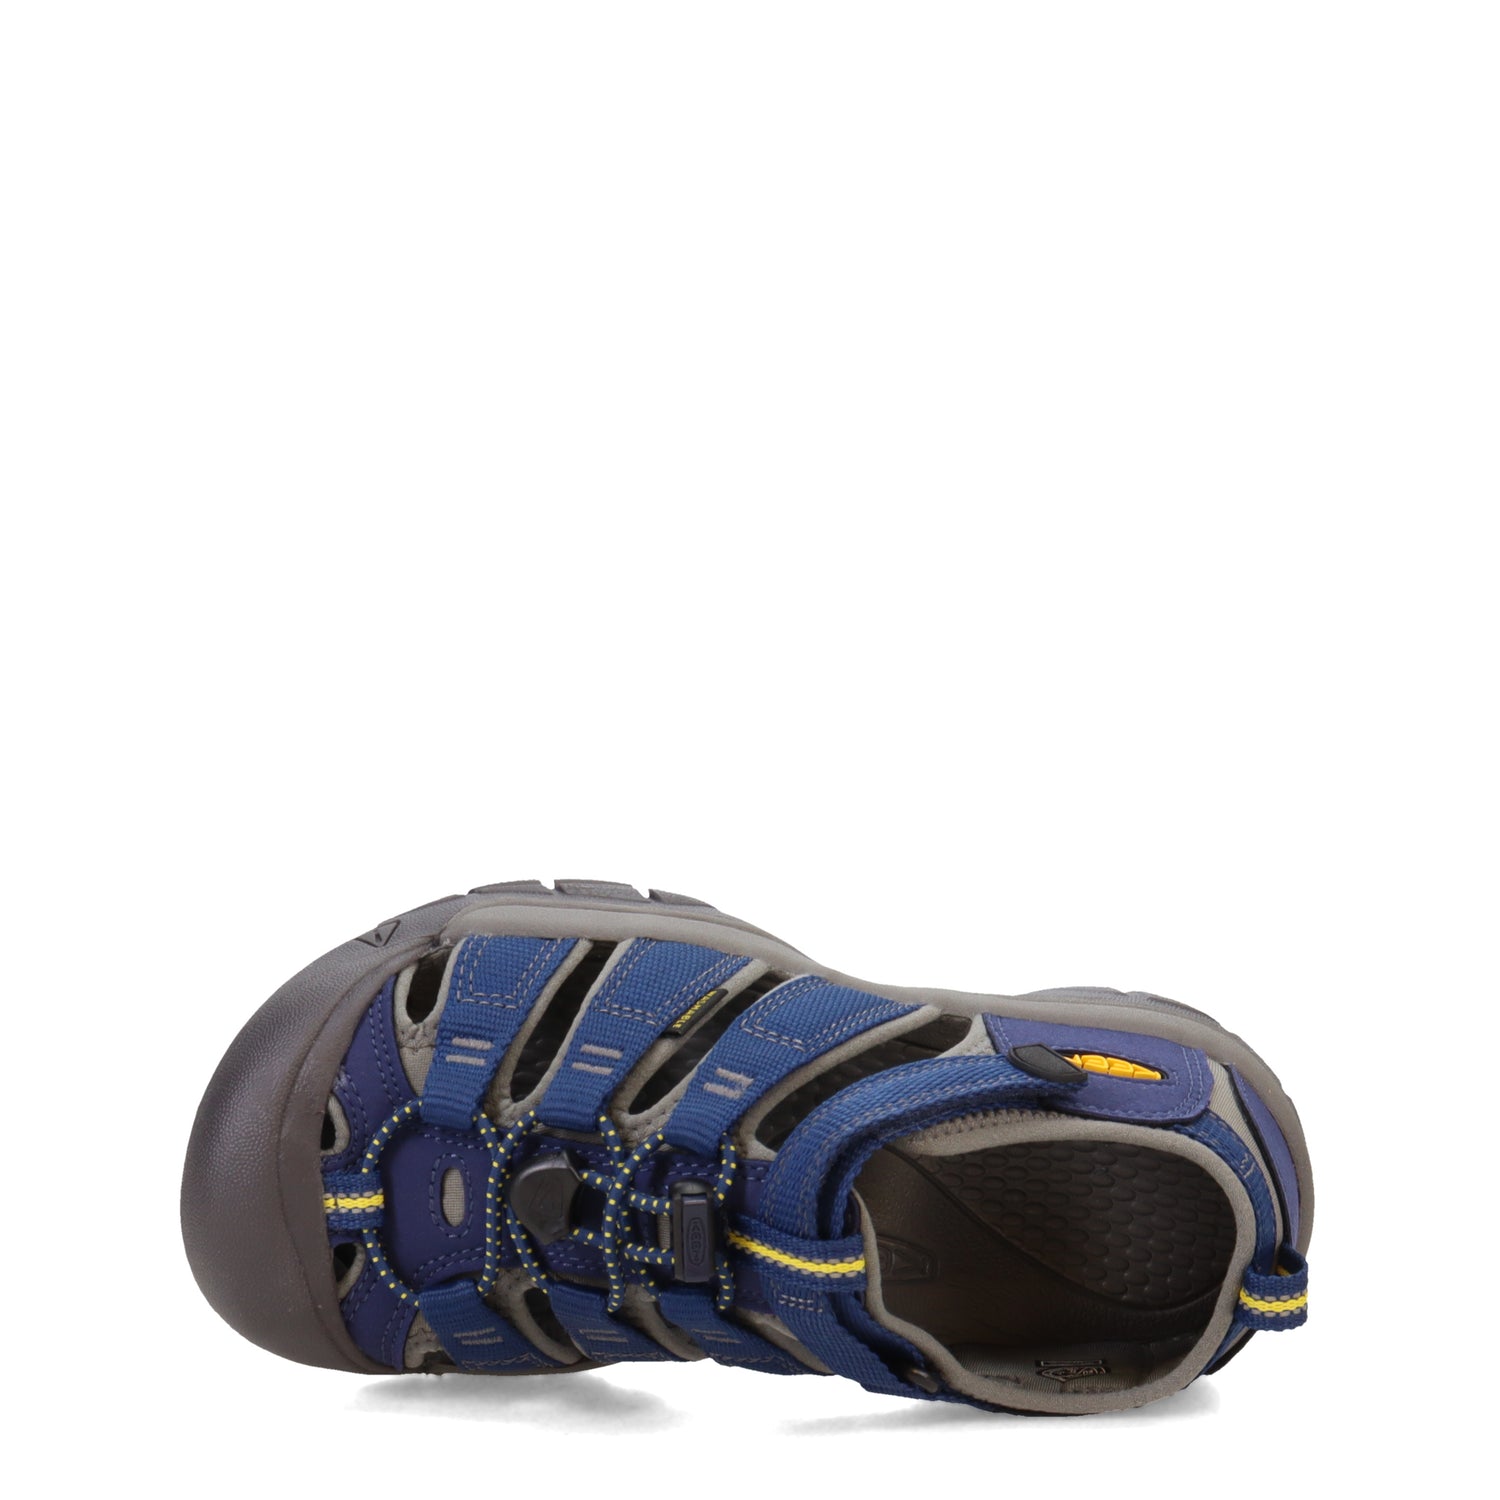 Peltz Shoes  Boy's Keen Newport H2 Waterproof Sandal - Little Kid & Big Kid Blue Depths/Gargoyle 1009962